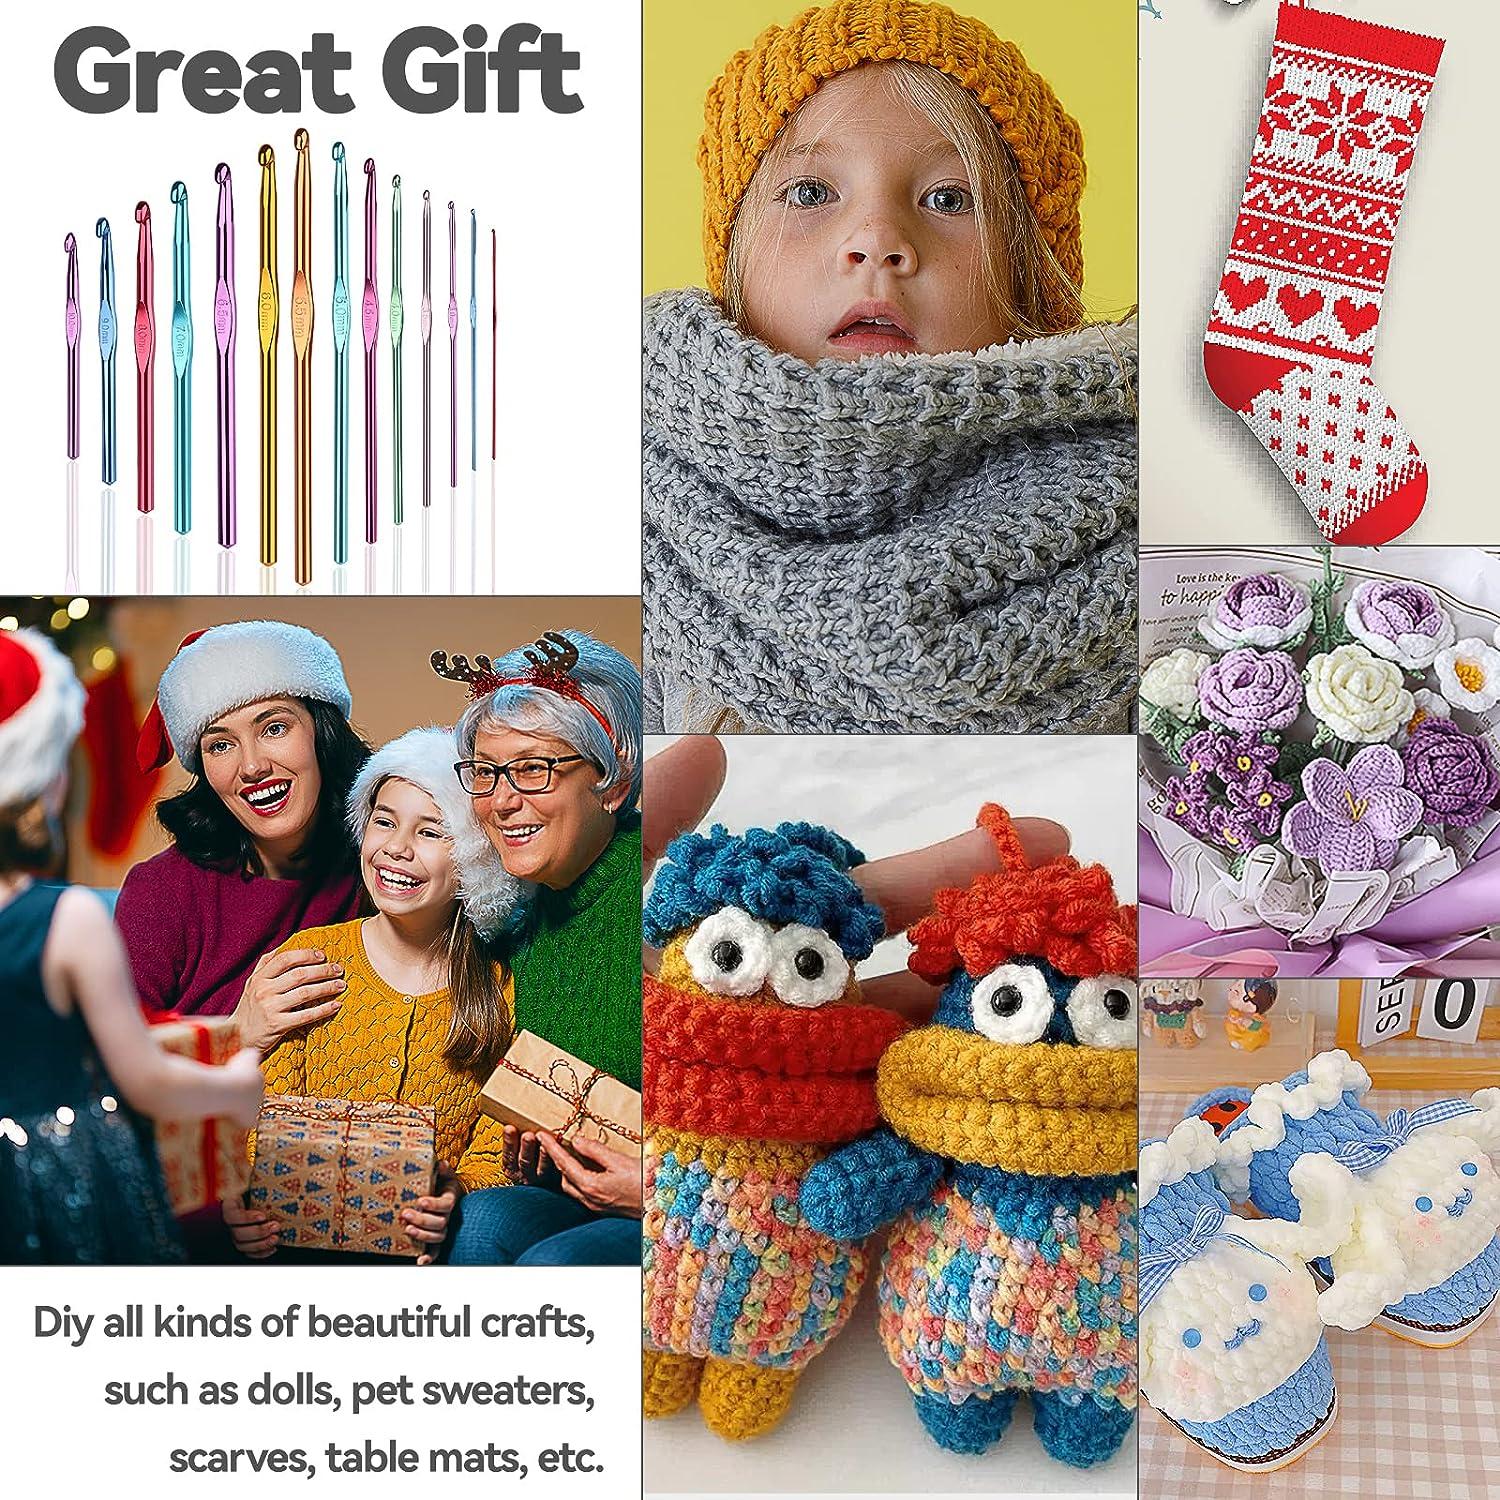  Coopay Crochet Kit Christmas Crochet Gifts -14PCS